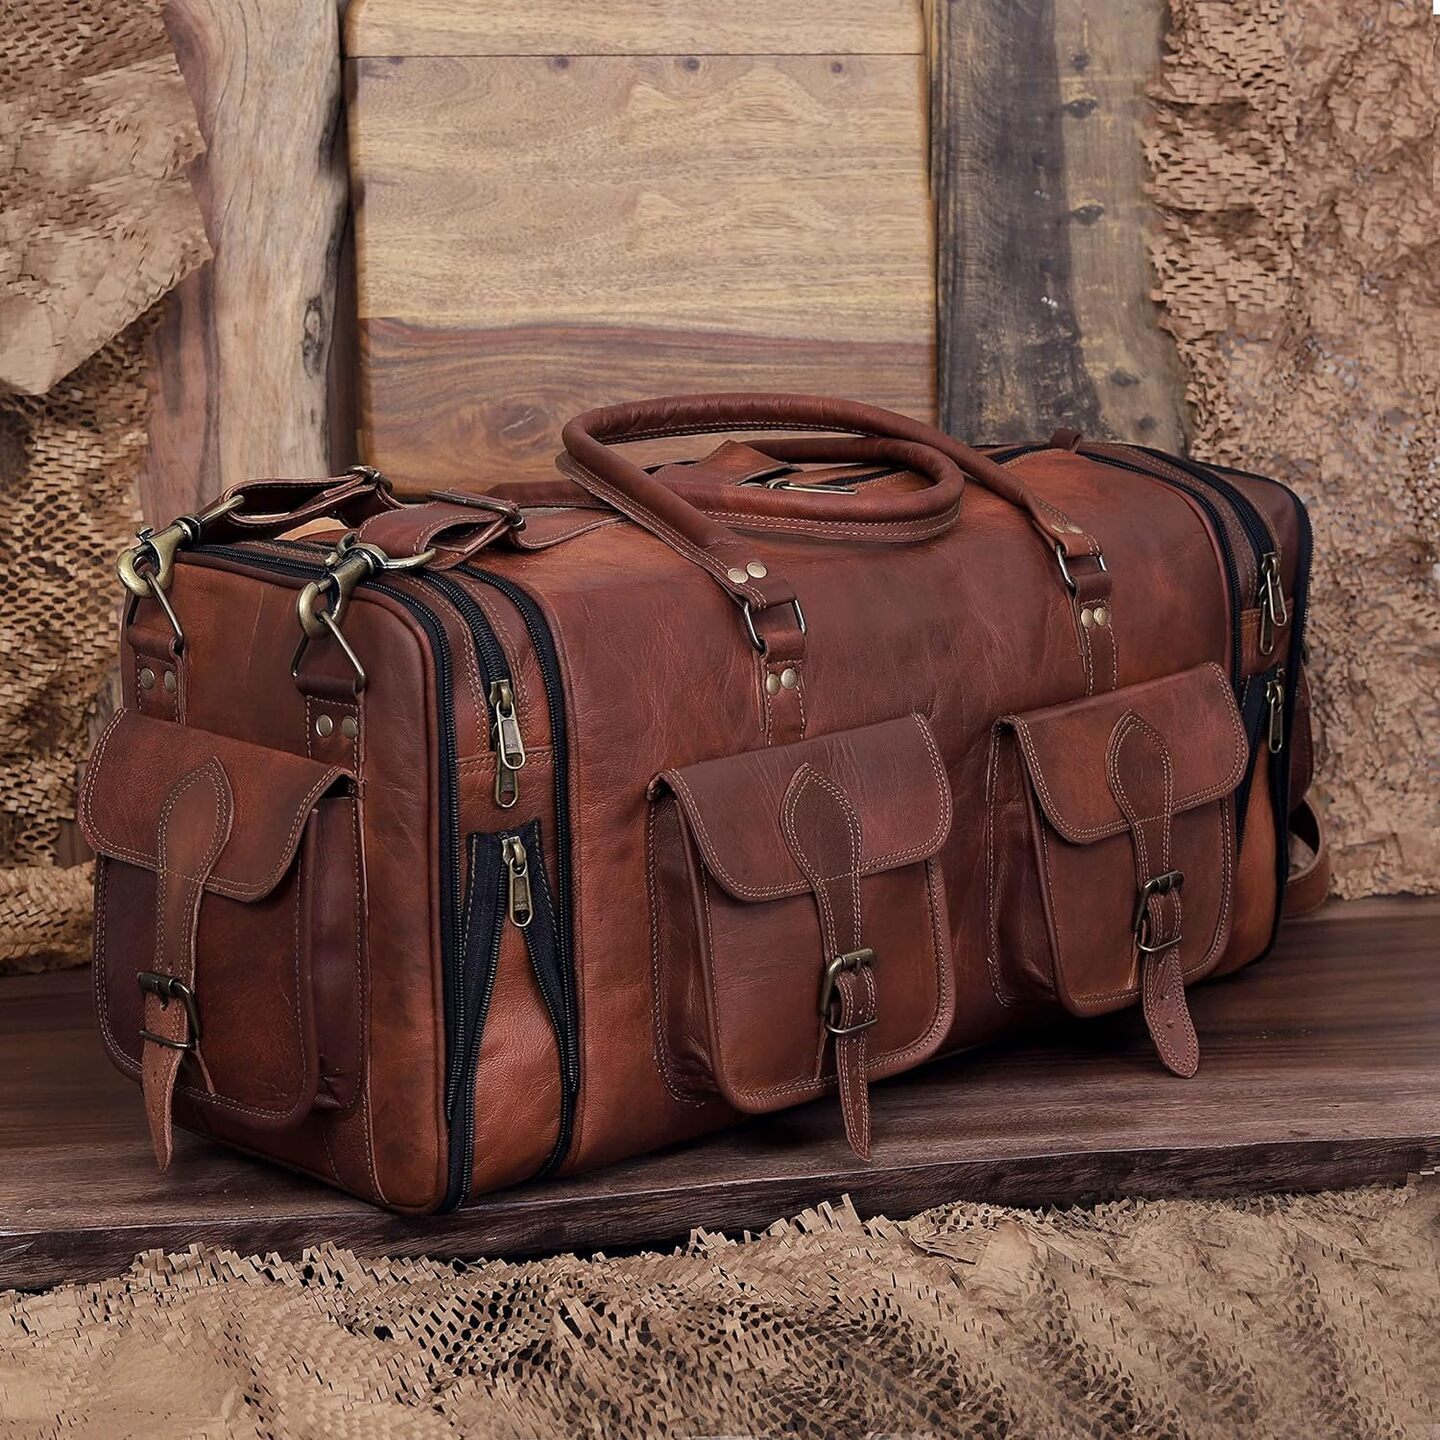 Handmade Vintage Travel Luggage 30 Inch Duffel Gym Sports Bag Weekender Travel Overnight Carry One Duffel Bag For Men 